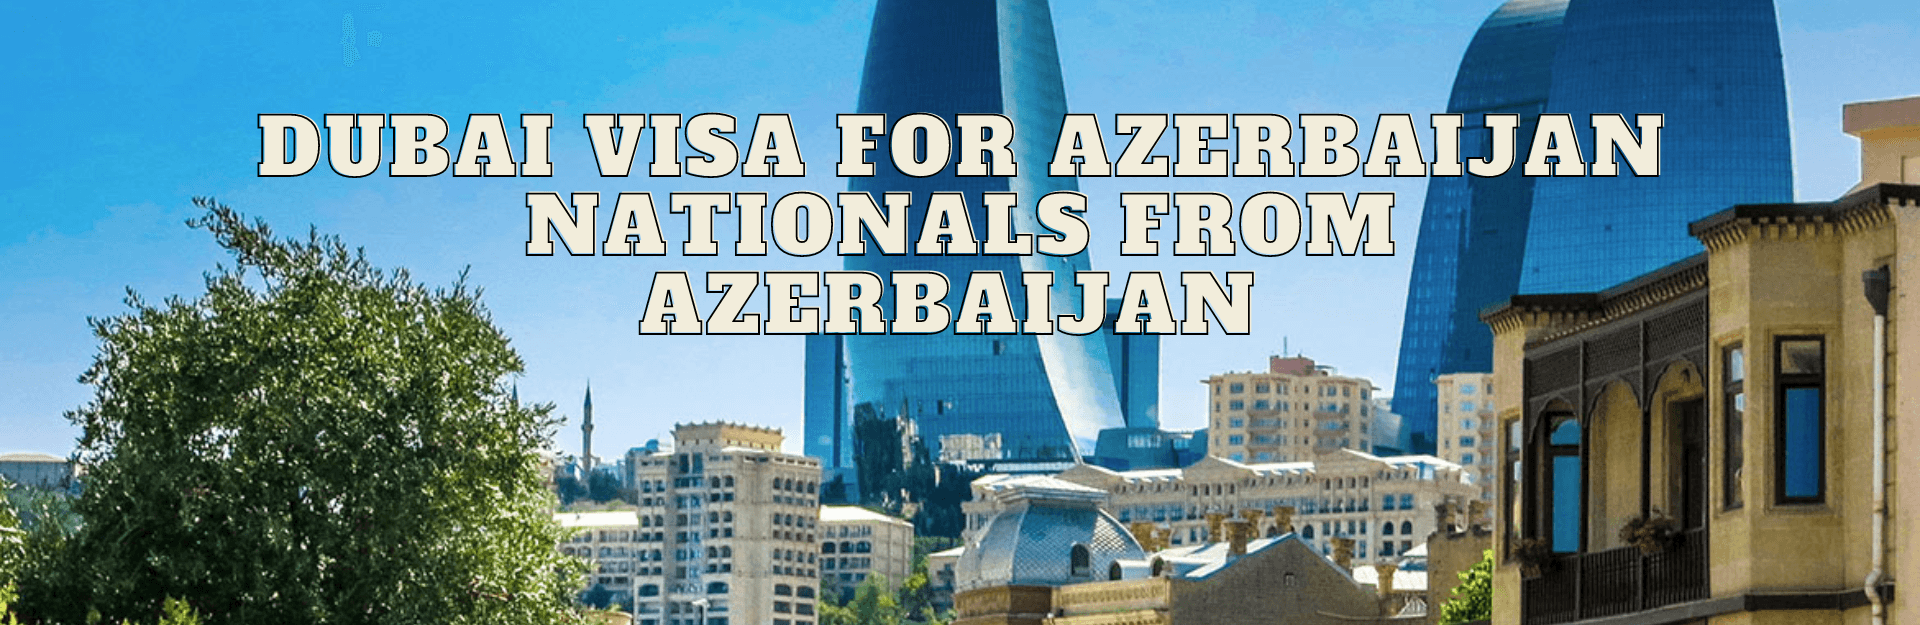 Dubai Visa for Azerbaijan Nationals from Azerbaijan